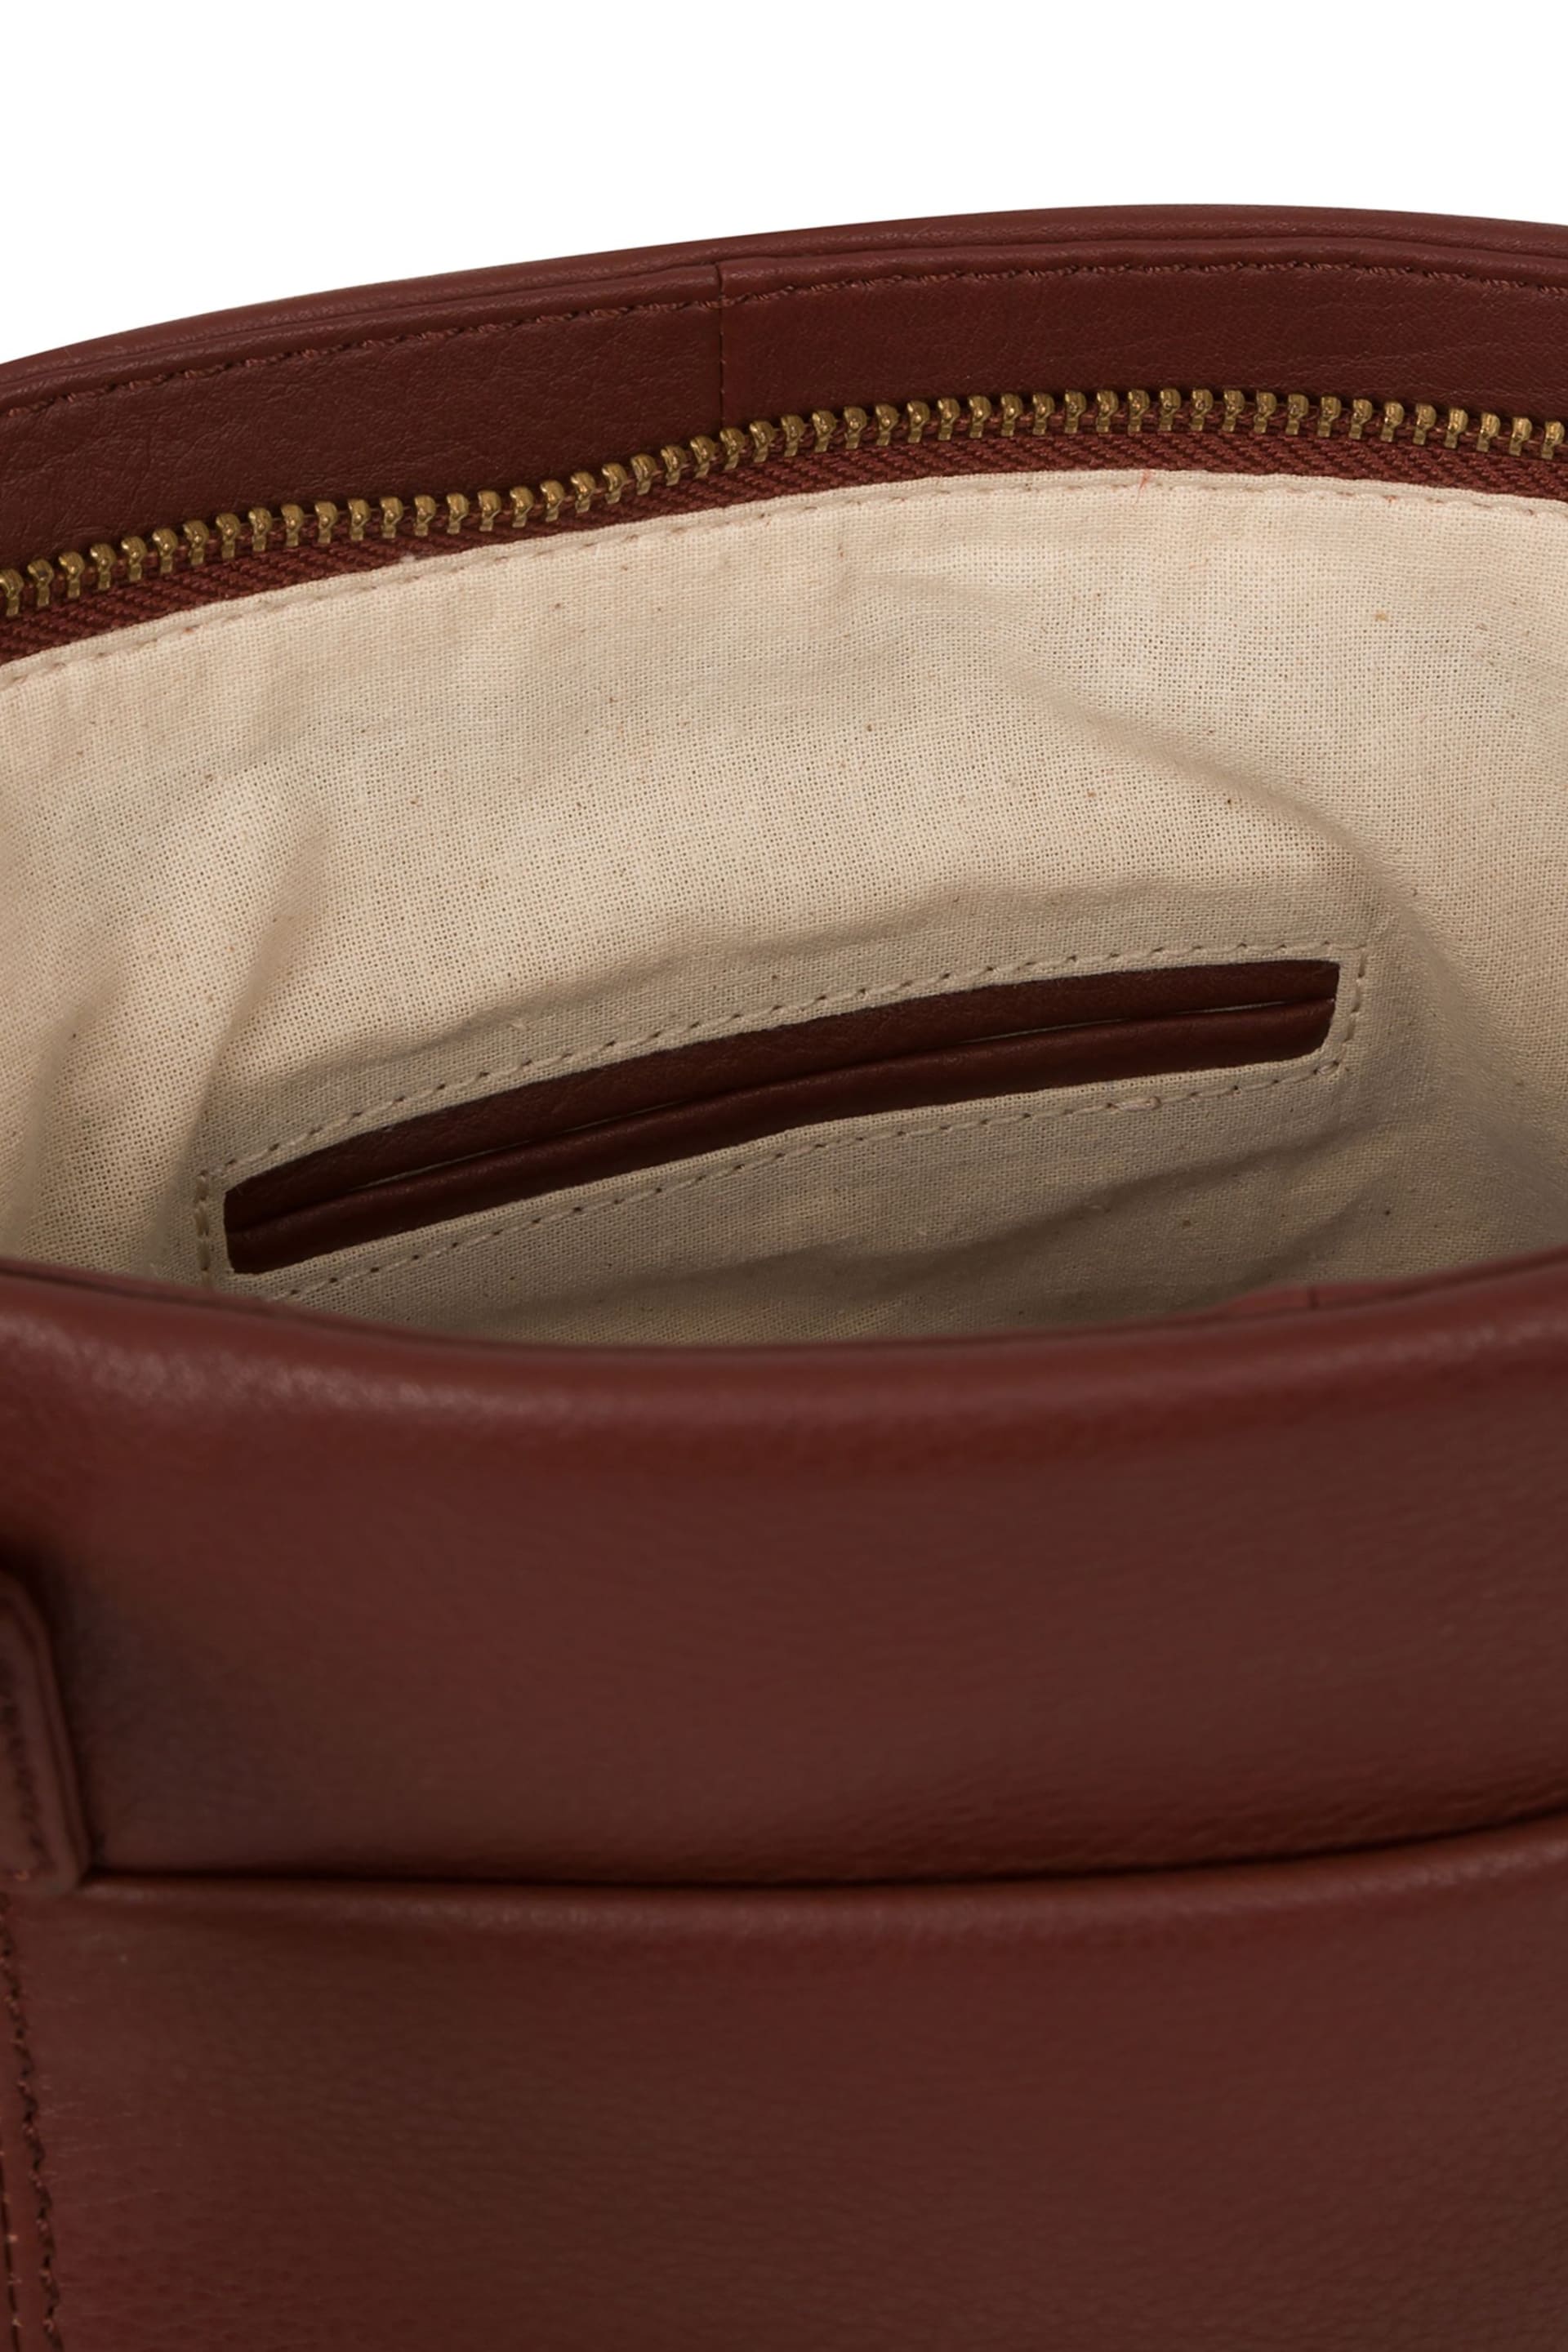 Pure Luxuries London Adley Leather Handbag - Image 7 of 7